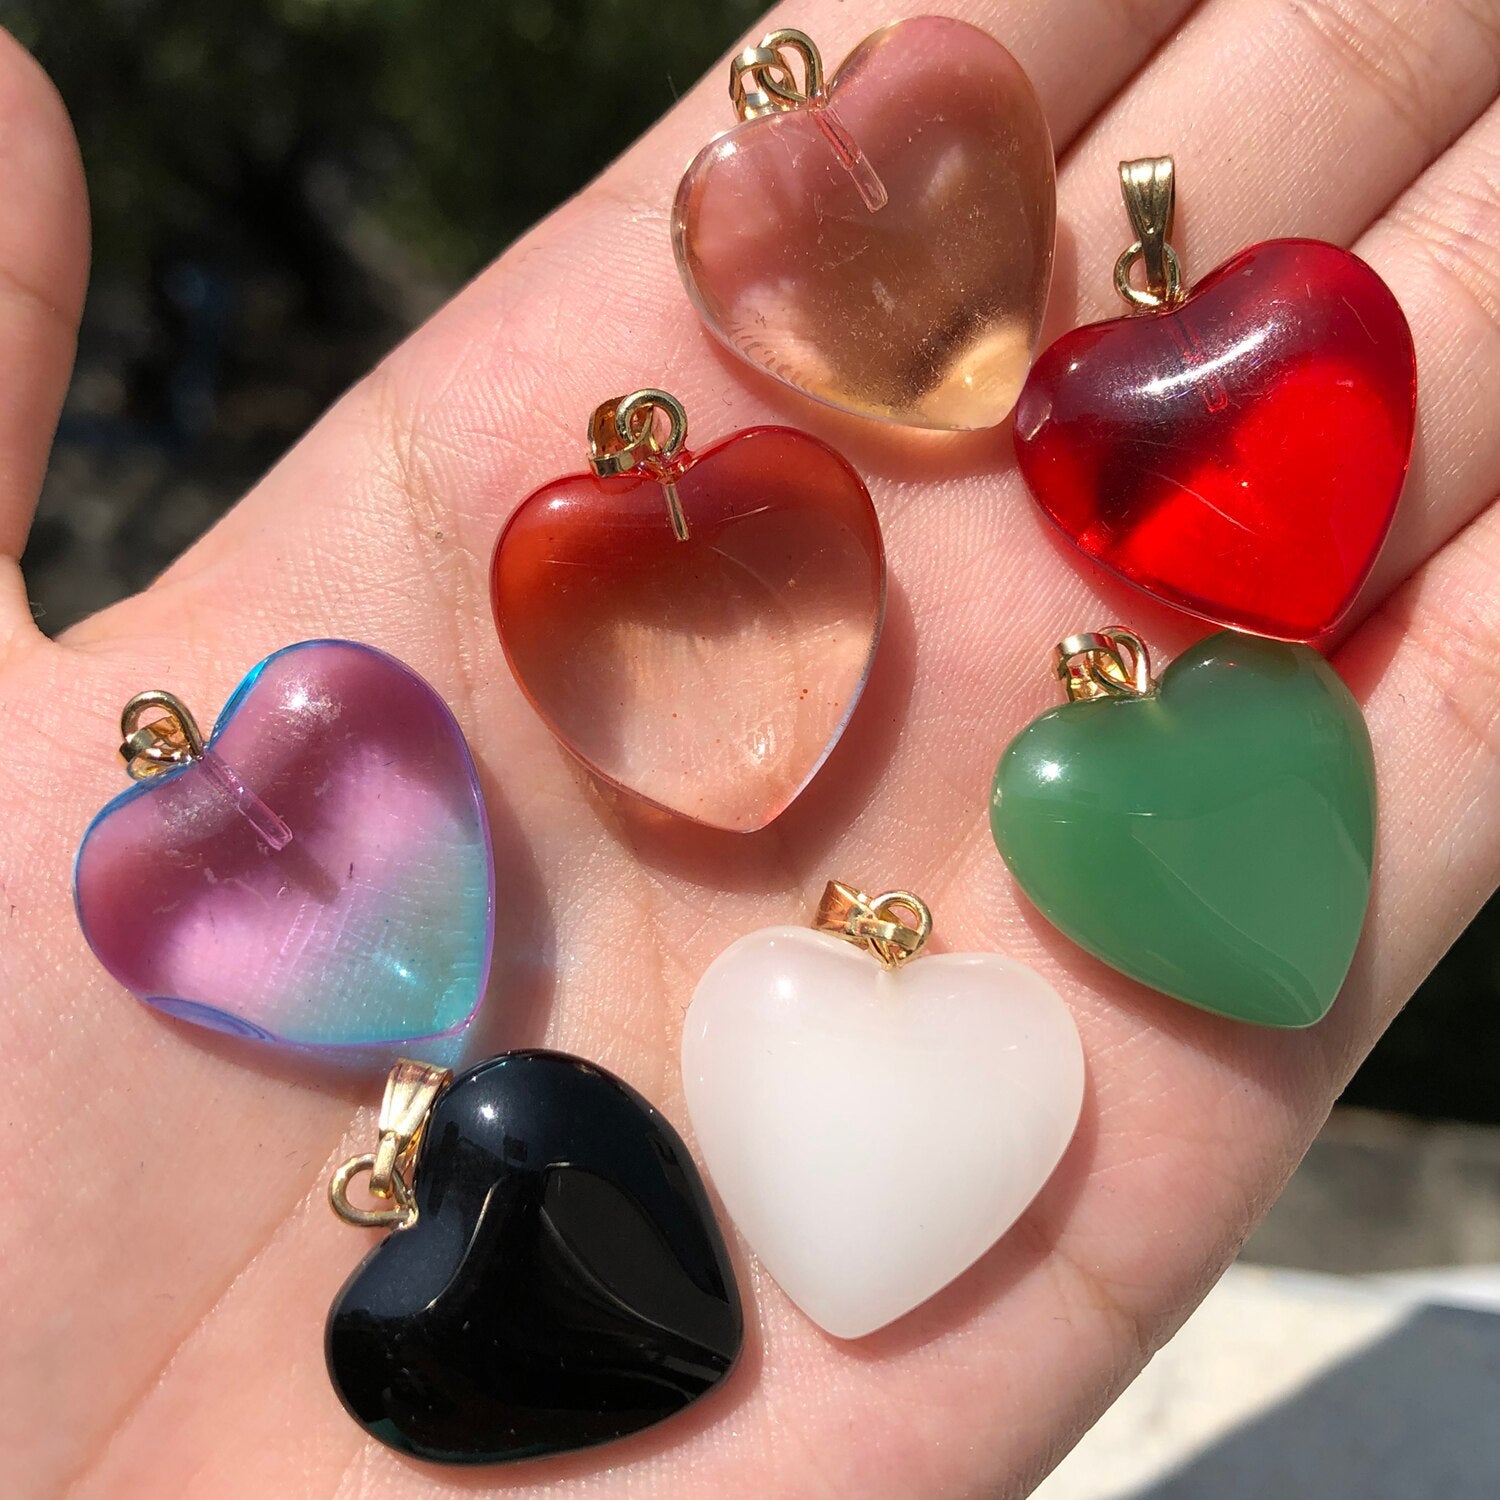 1 pcs Gradient Czech  Crystal Glass Heart Beads Charms pendant